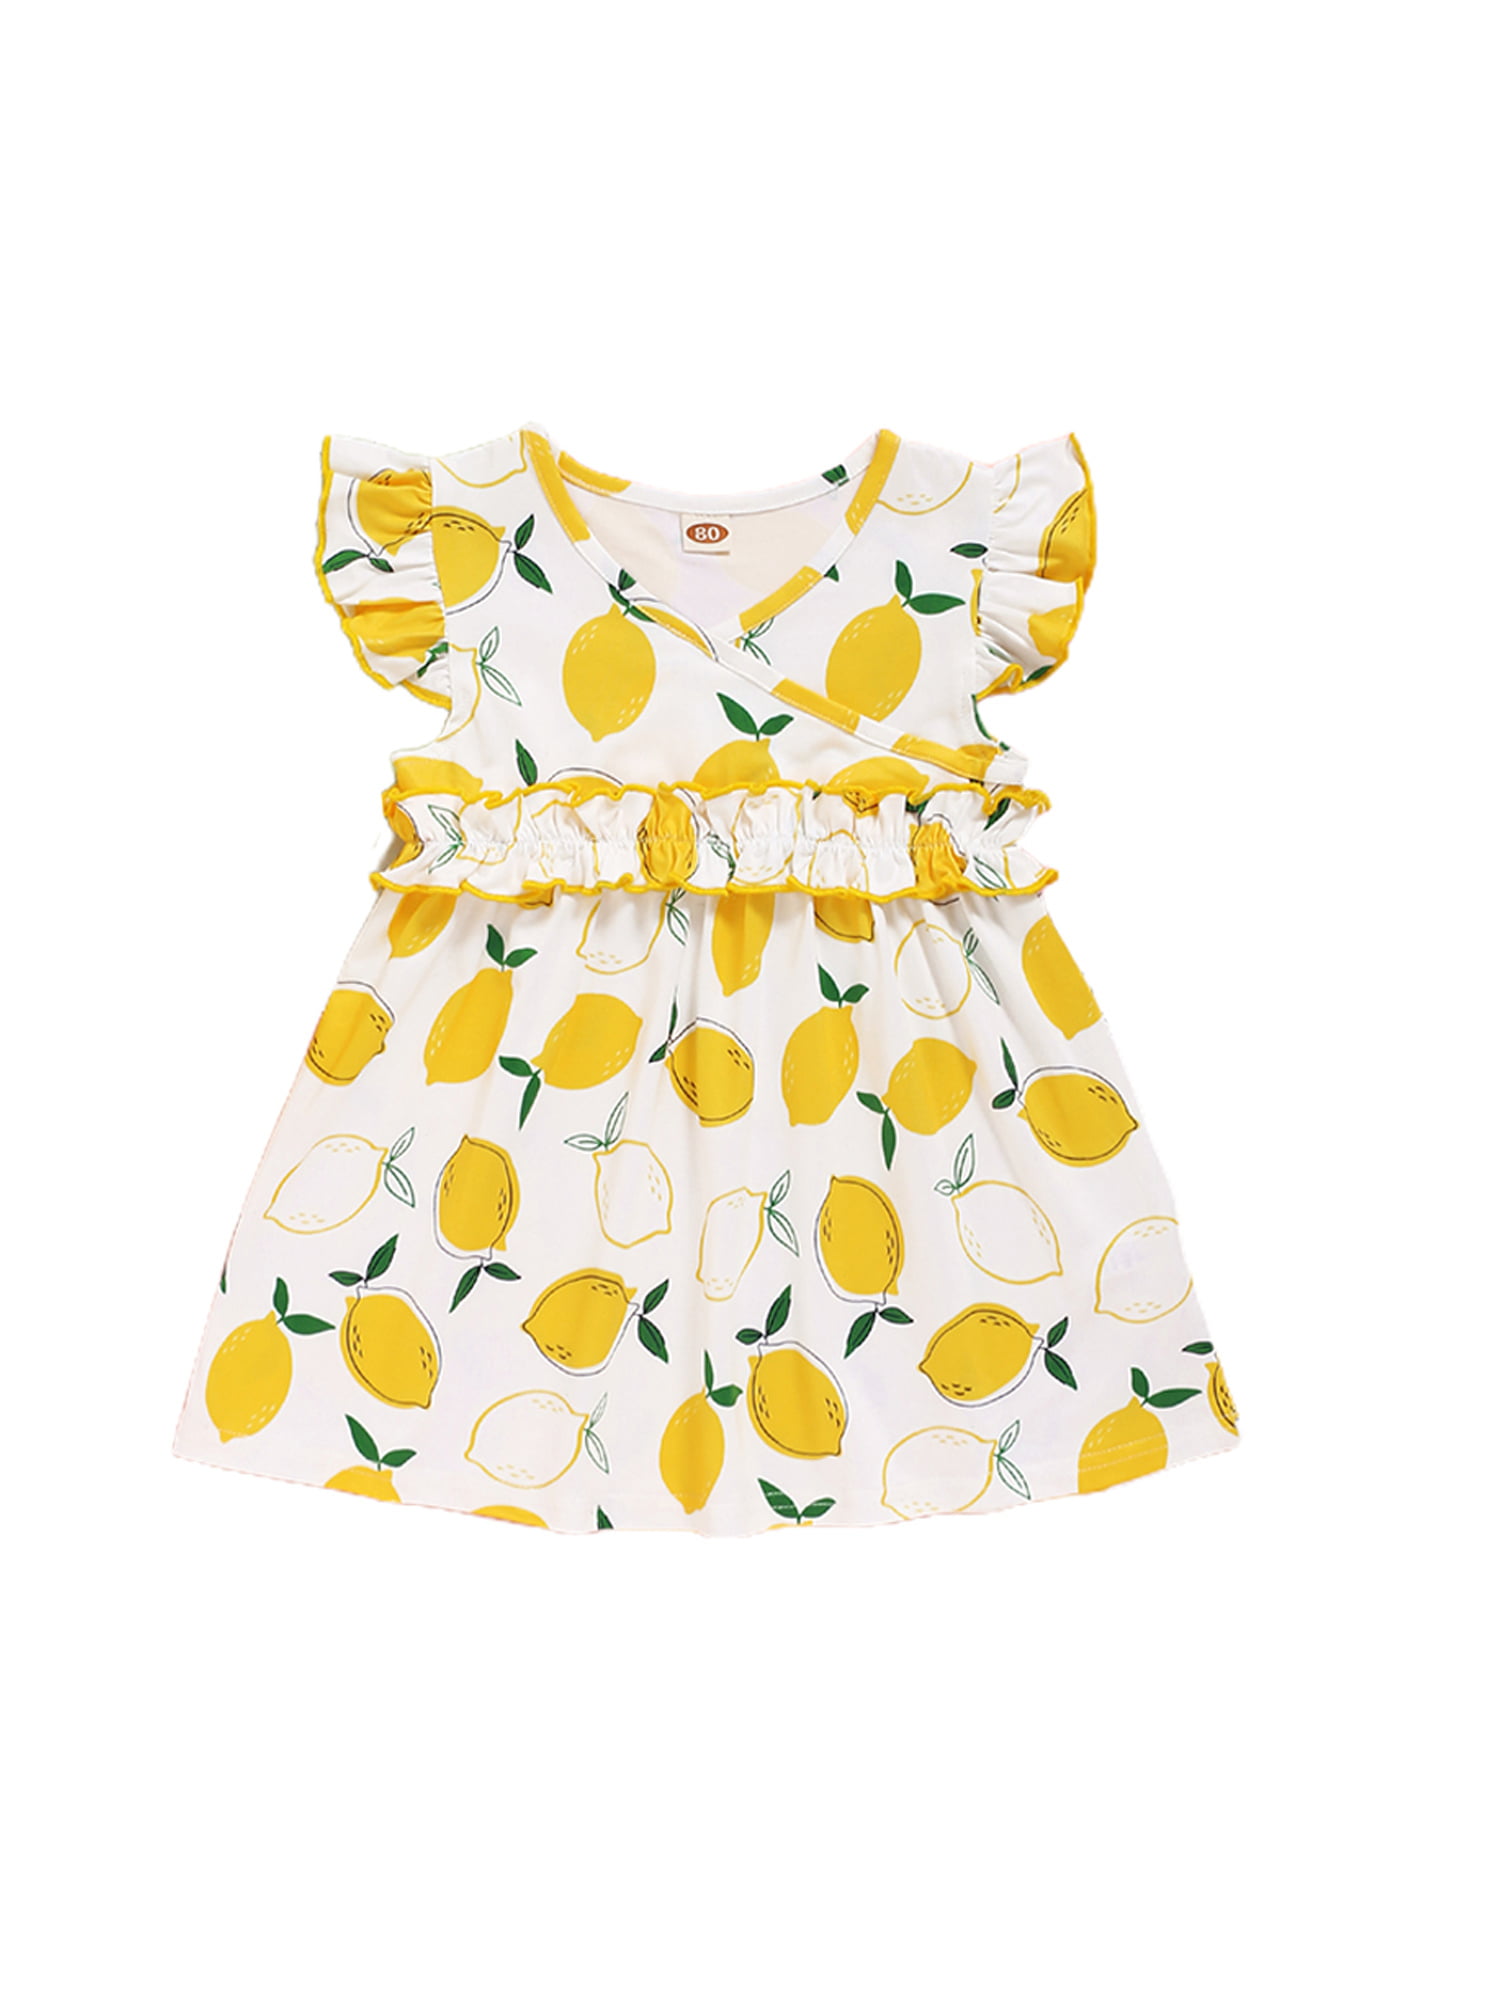 Yoyorule Kids Girls Dress Infant Baby Lemon Print Ruffles Dresses 